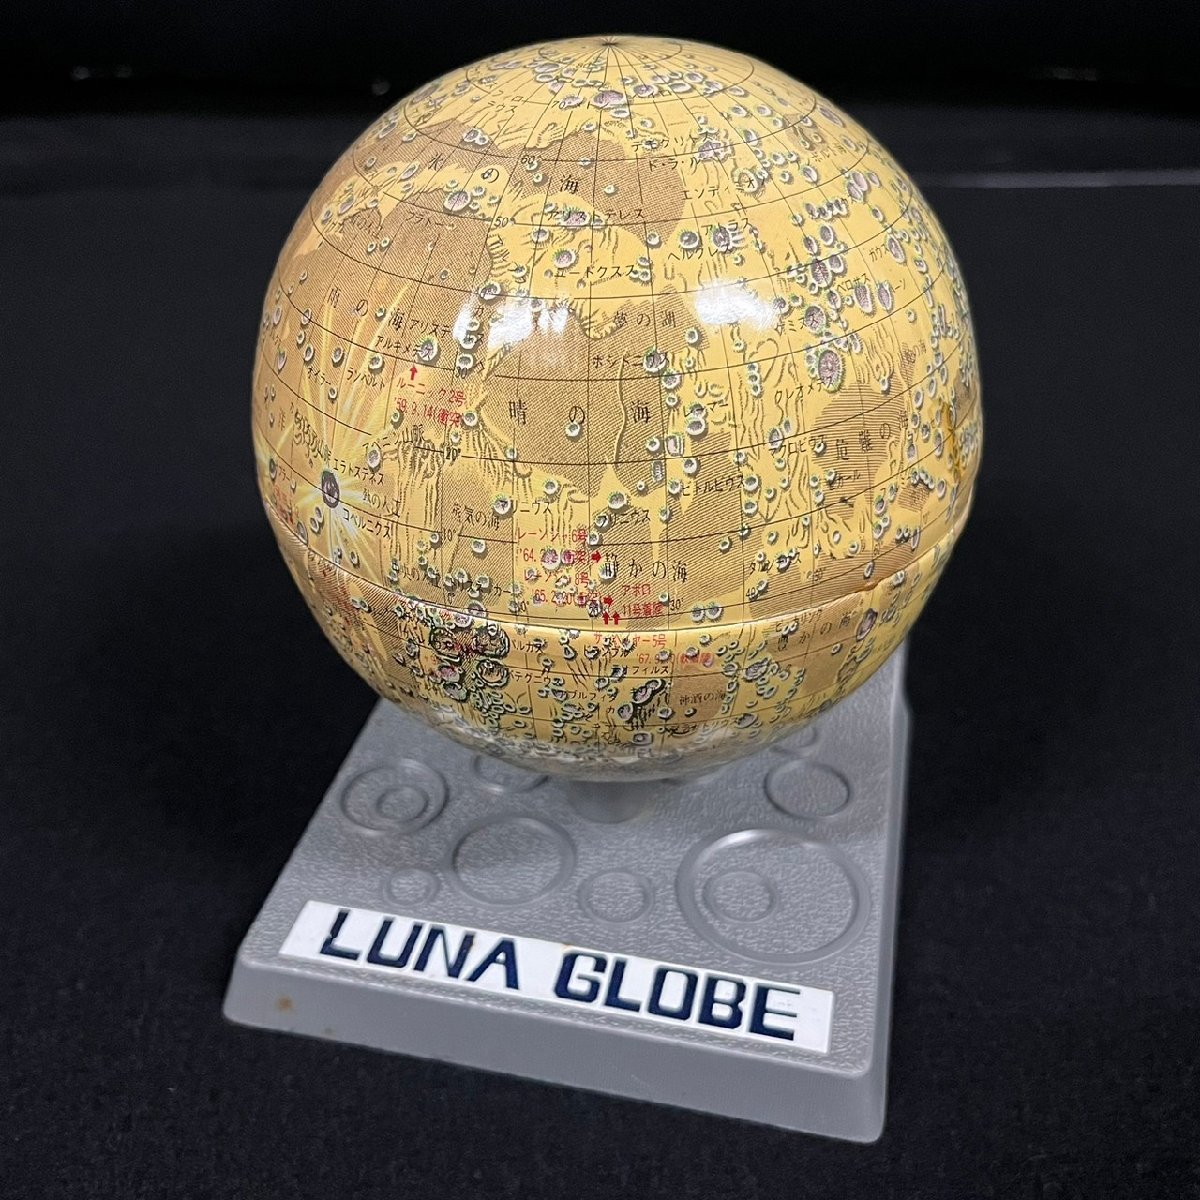 ヤフオク! - LUNA GLOBE SAVING BOX 月球儀 貯金箱...